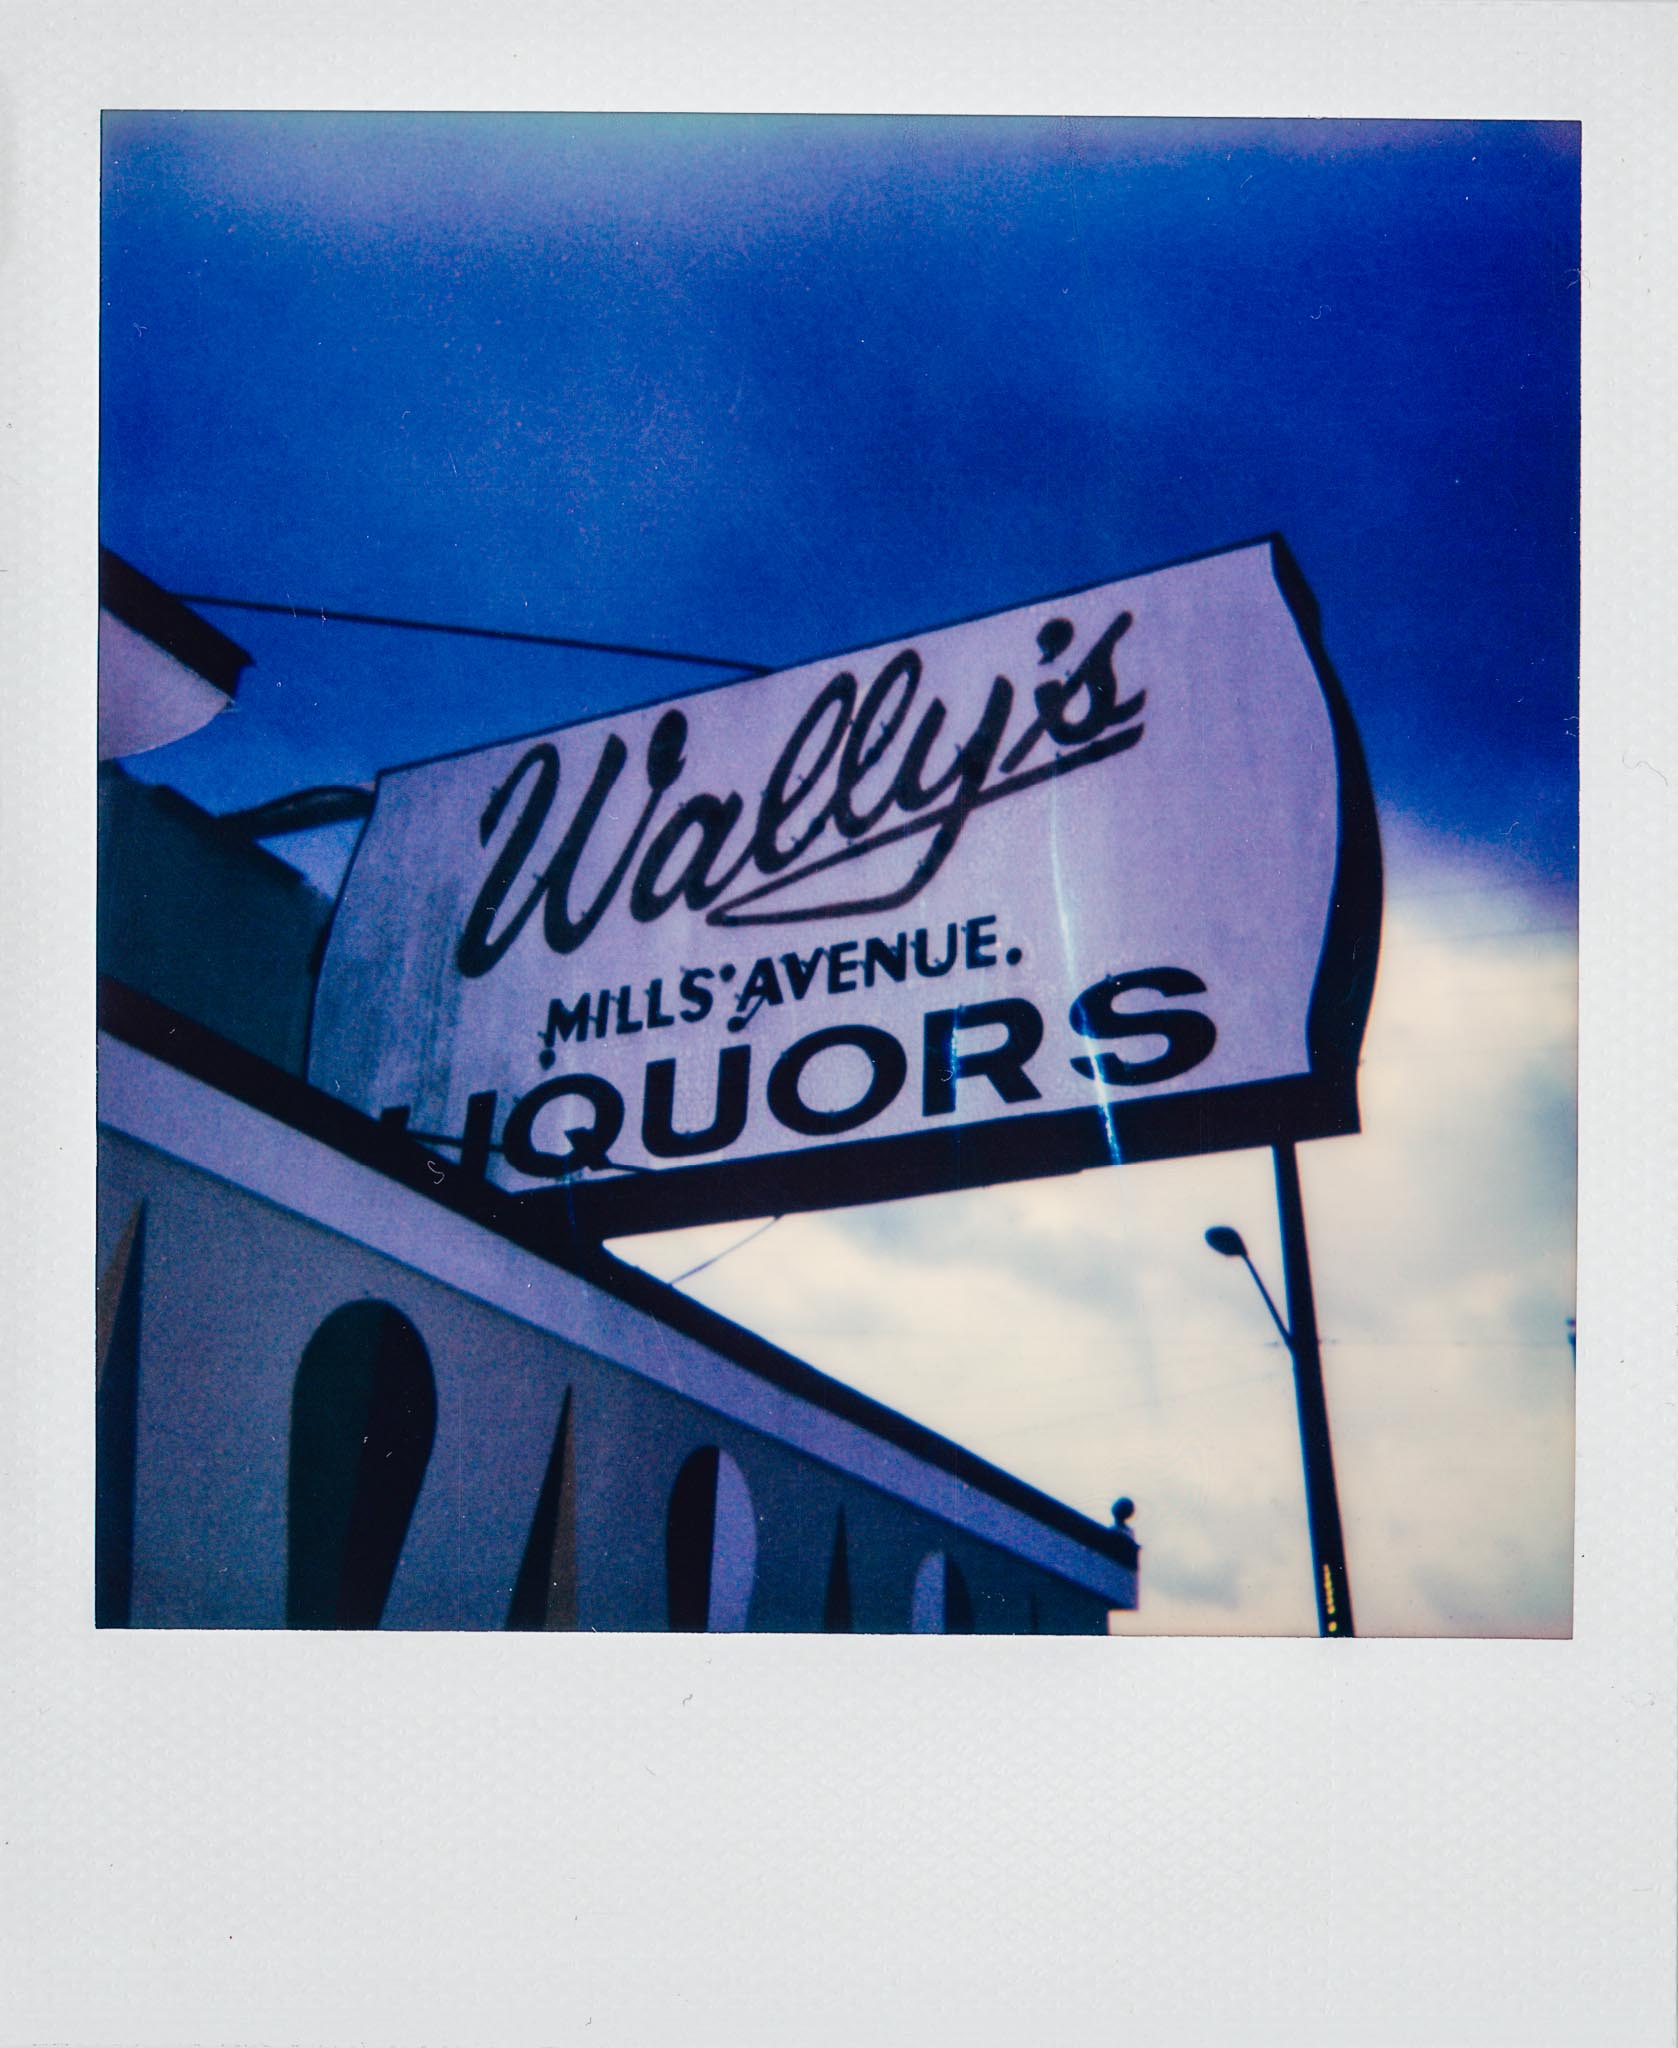 Polaroid of Wally's Mills Avenue Liquors Outdoor Sign